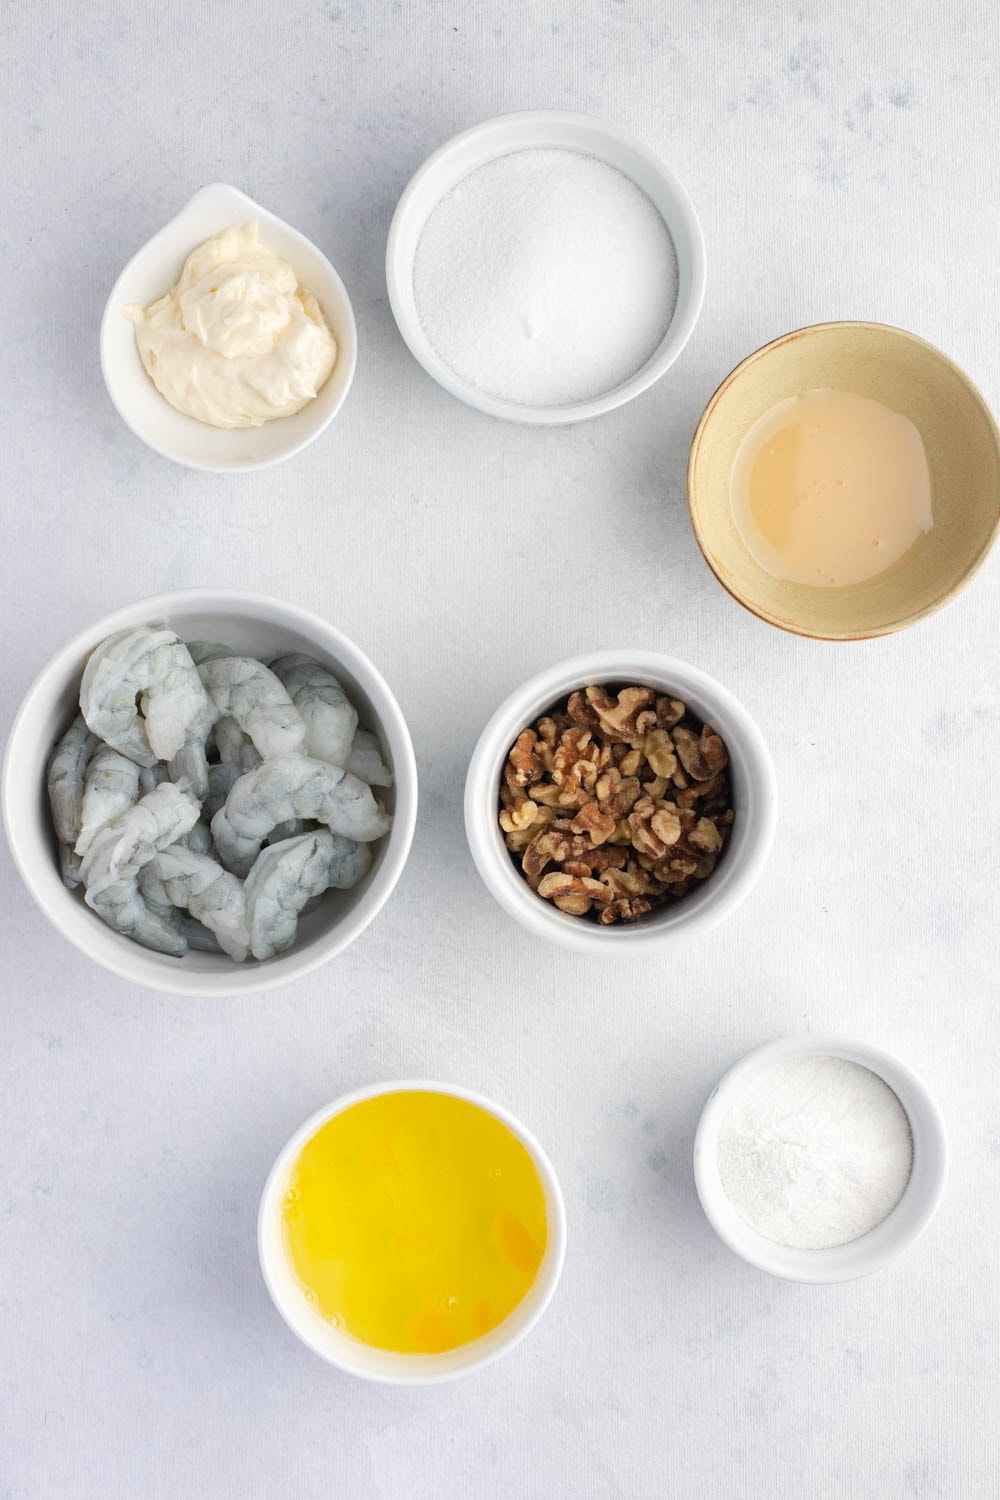 Honey Walnut Shrimp Ingredients - Shrimp, Mochiko Flour, Egg Whites, Vegetable Oil, Mayonnaise, Honey, Walnuts and Sugar